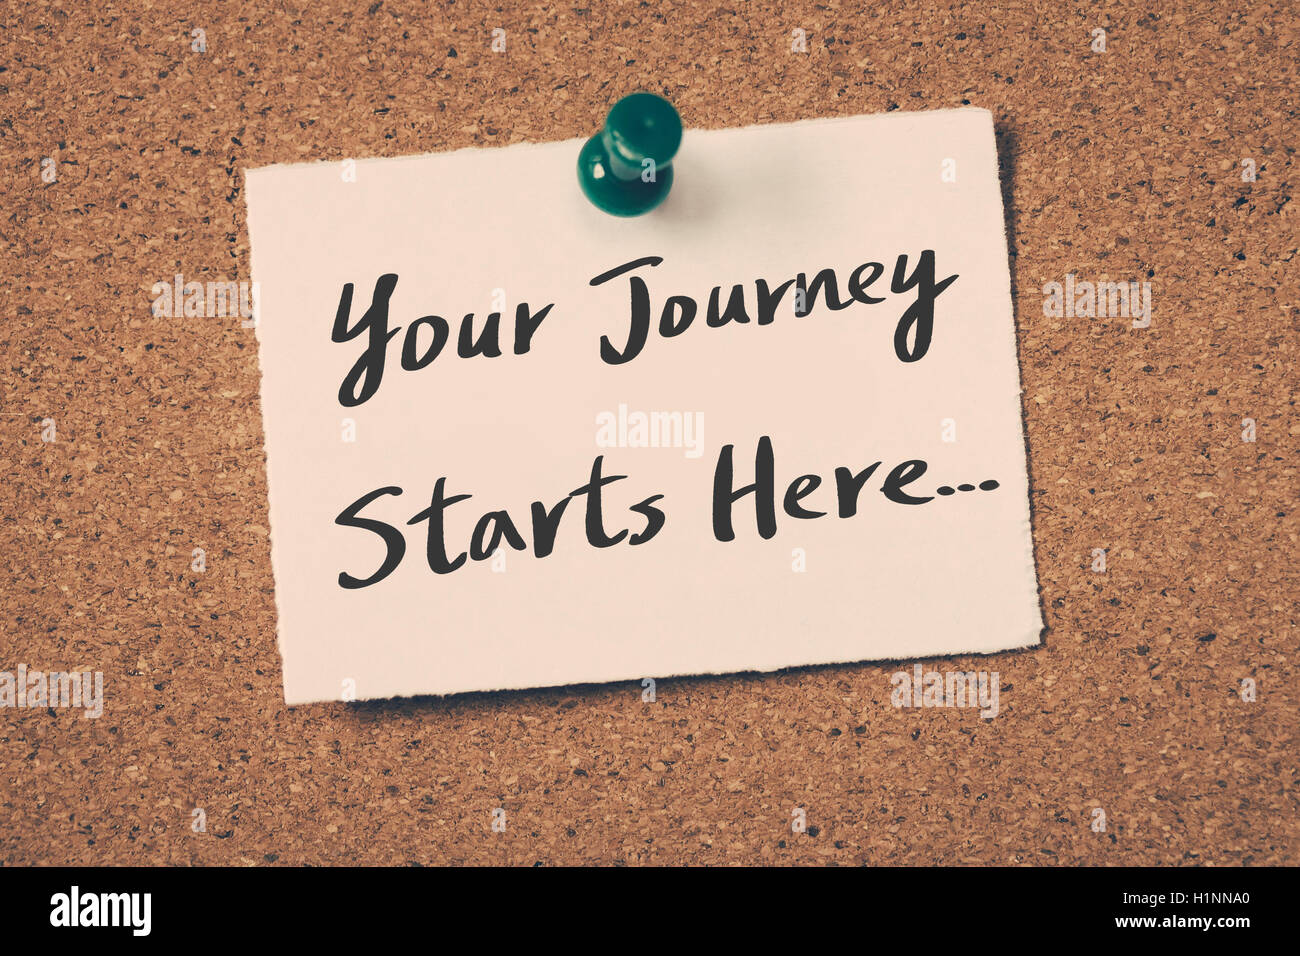 Путешествие начинается здесь. The Journey starts here. Start a Journey. Start your Journey.